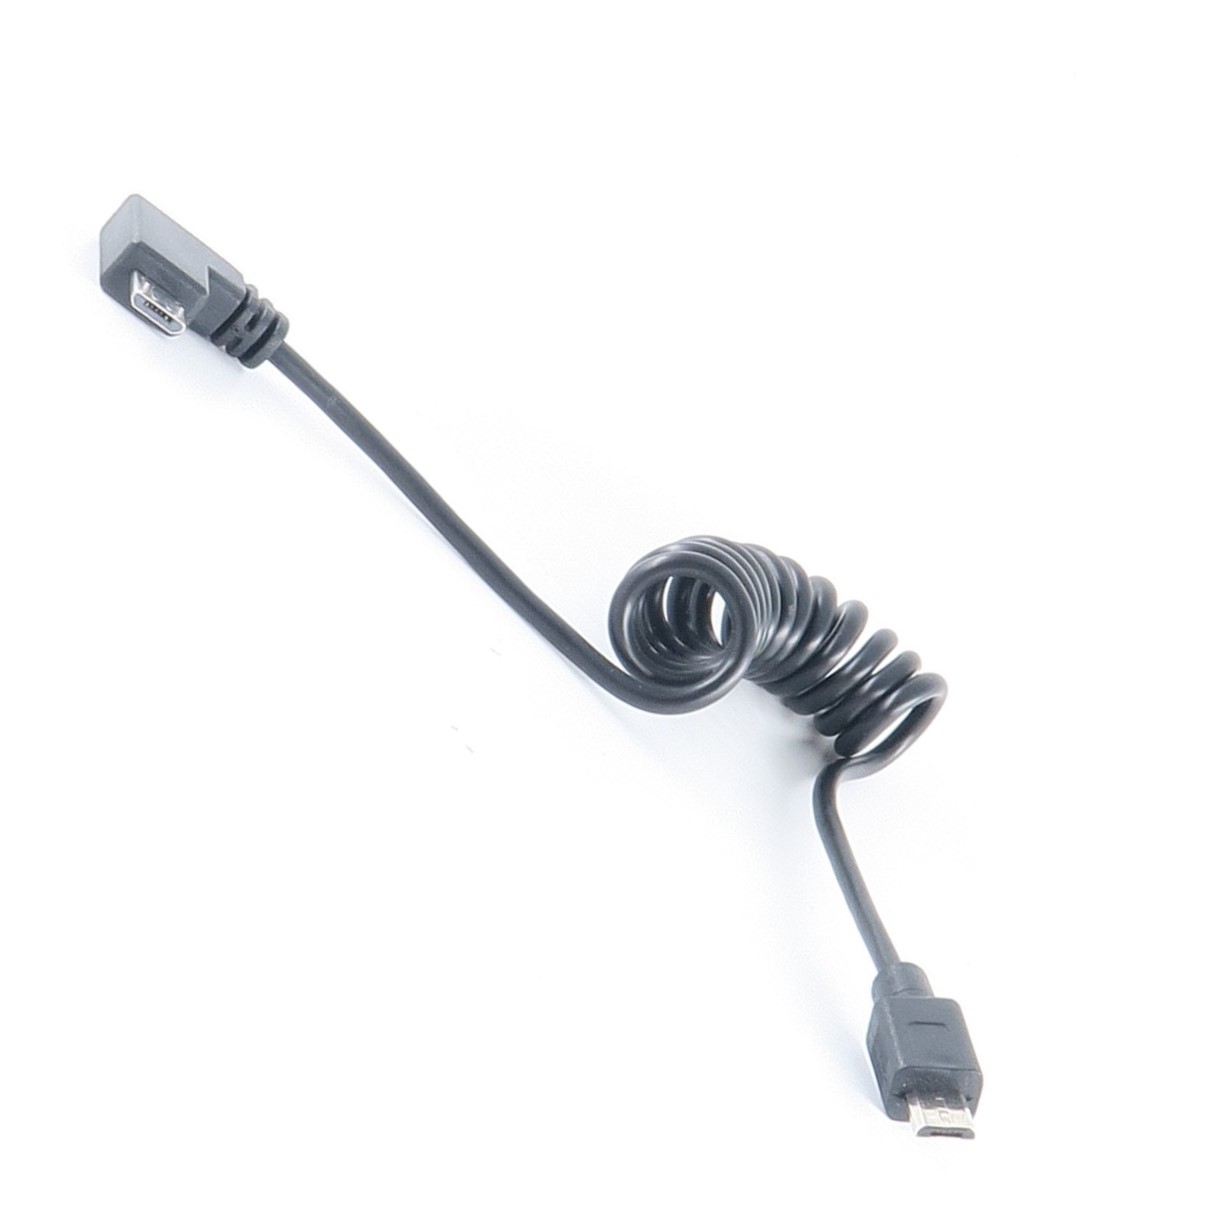 Connecthor Cable - Micro USB to Micro USB (DJI Spark/Mavic Mini)